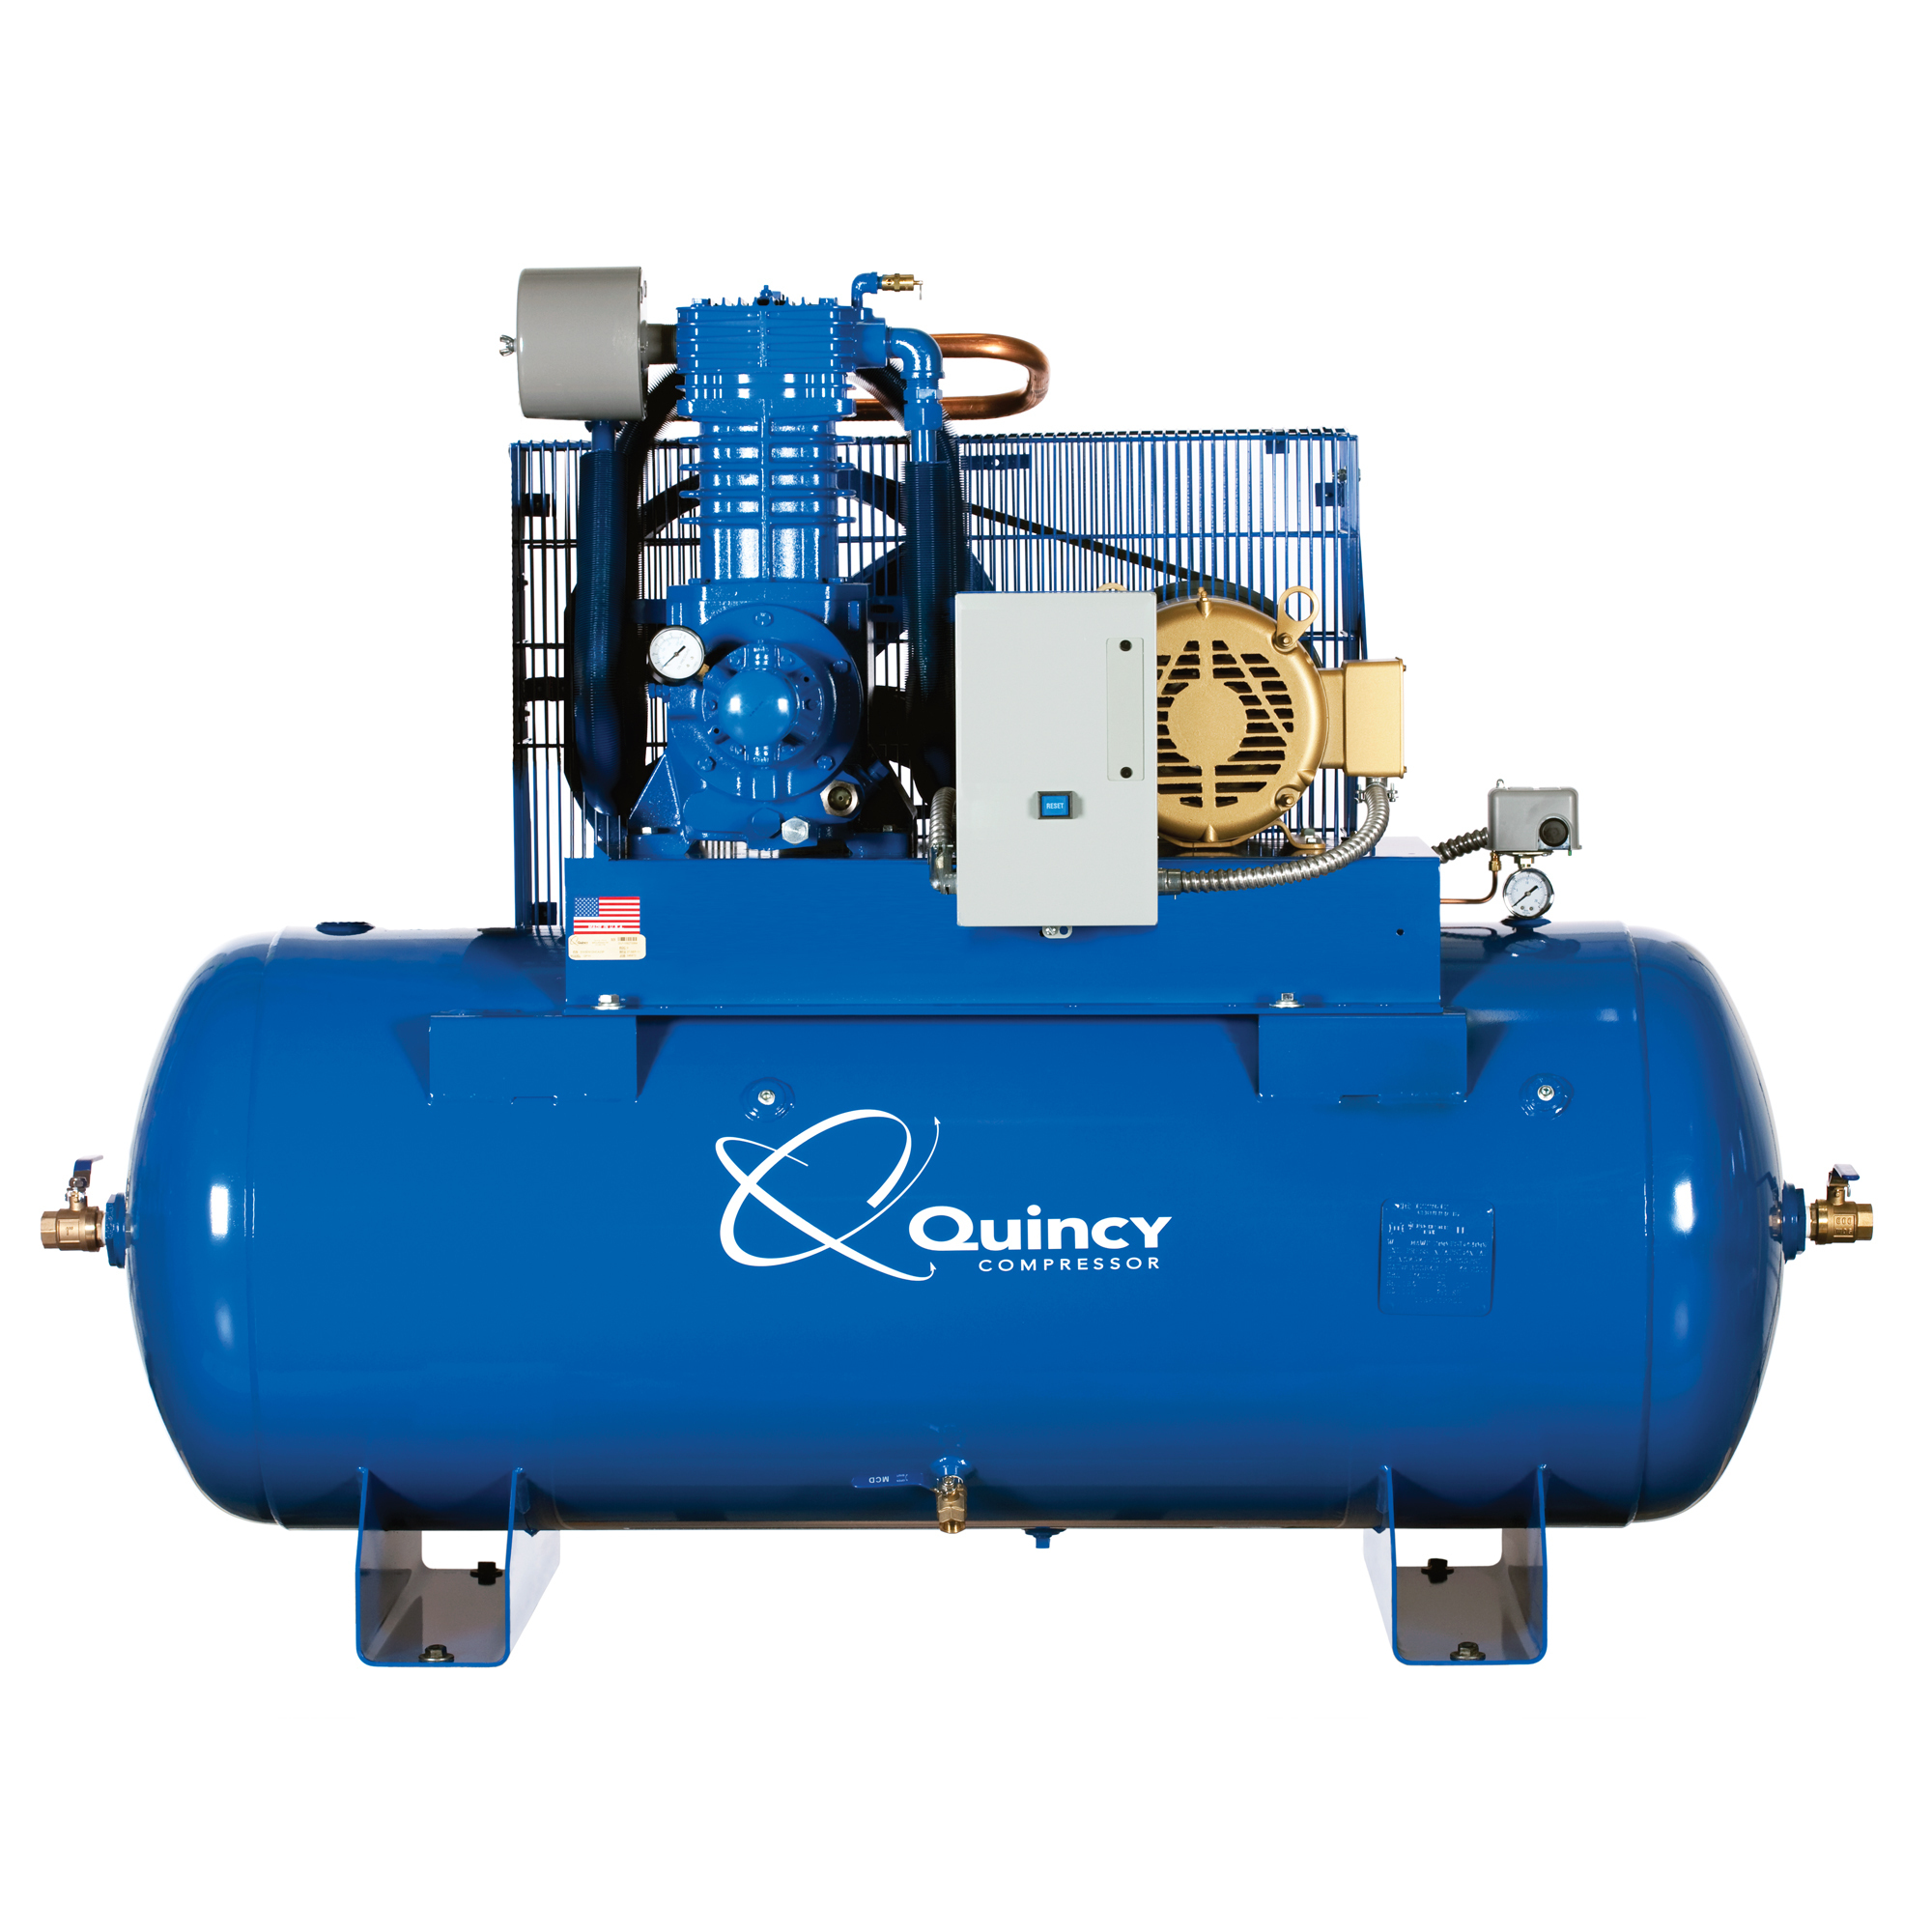 Quincy Compressor, QP1 5H 80G 2Stg Air Compressor 200V 3ph H PRO, Horsepower 5 HP, Air Tank Size 80 Gal, Volts 200 Model 553DS80HCA20